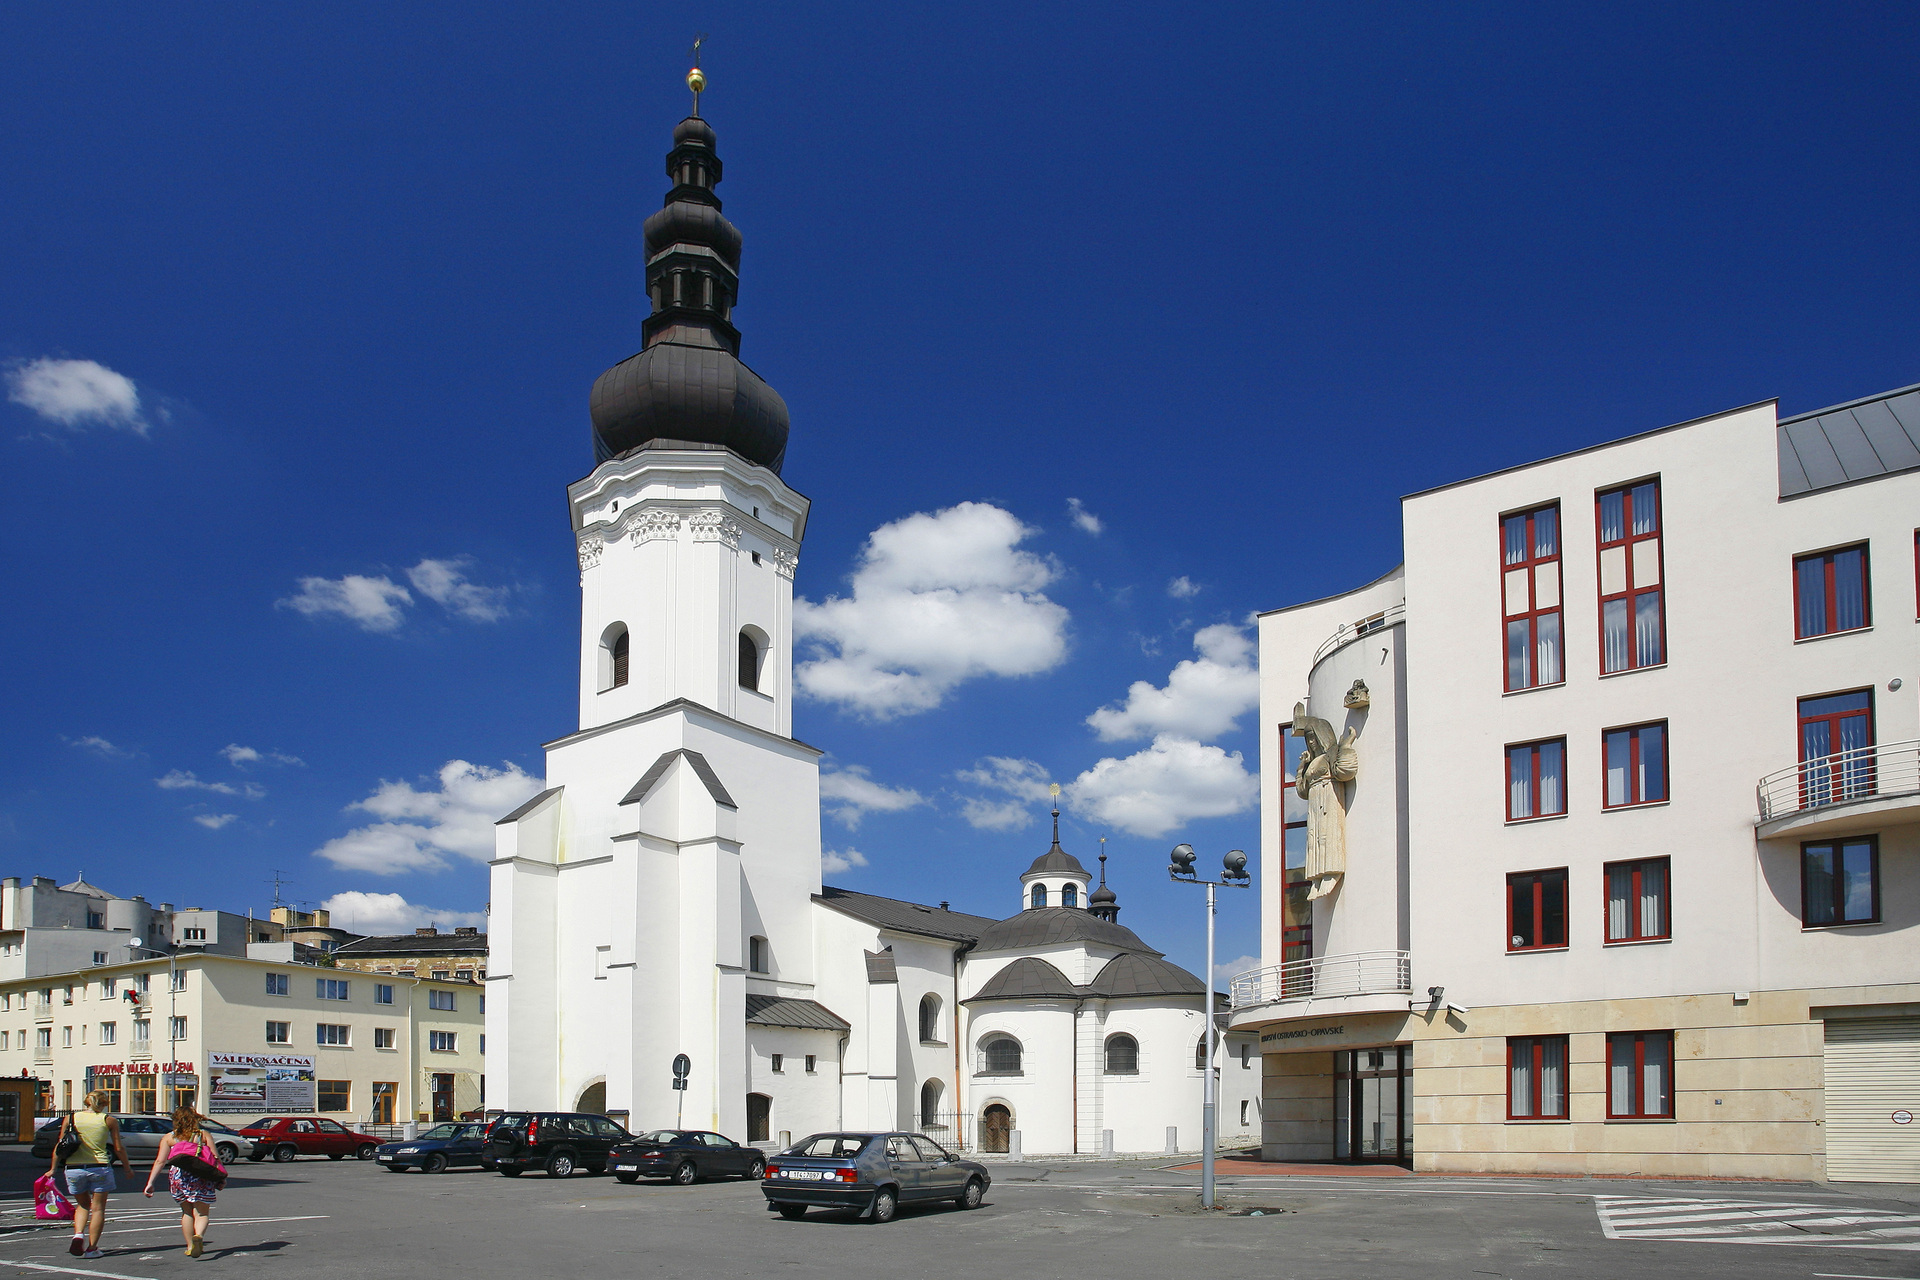 Saint Wenceslaus Church in Ostrava